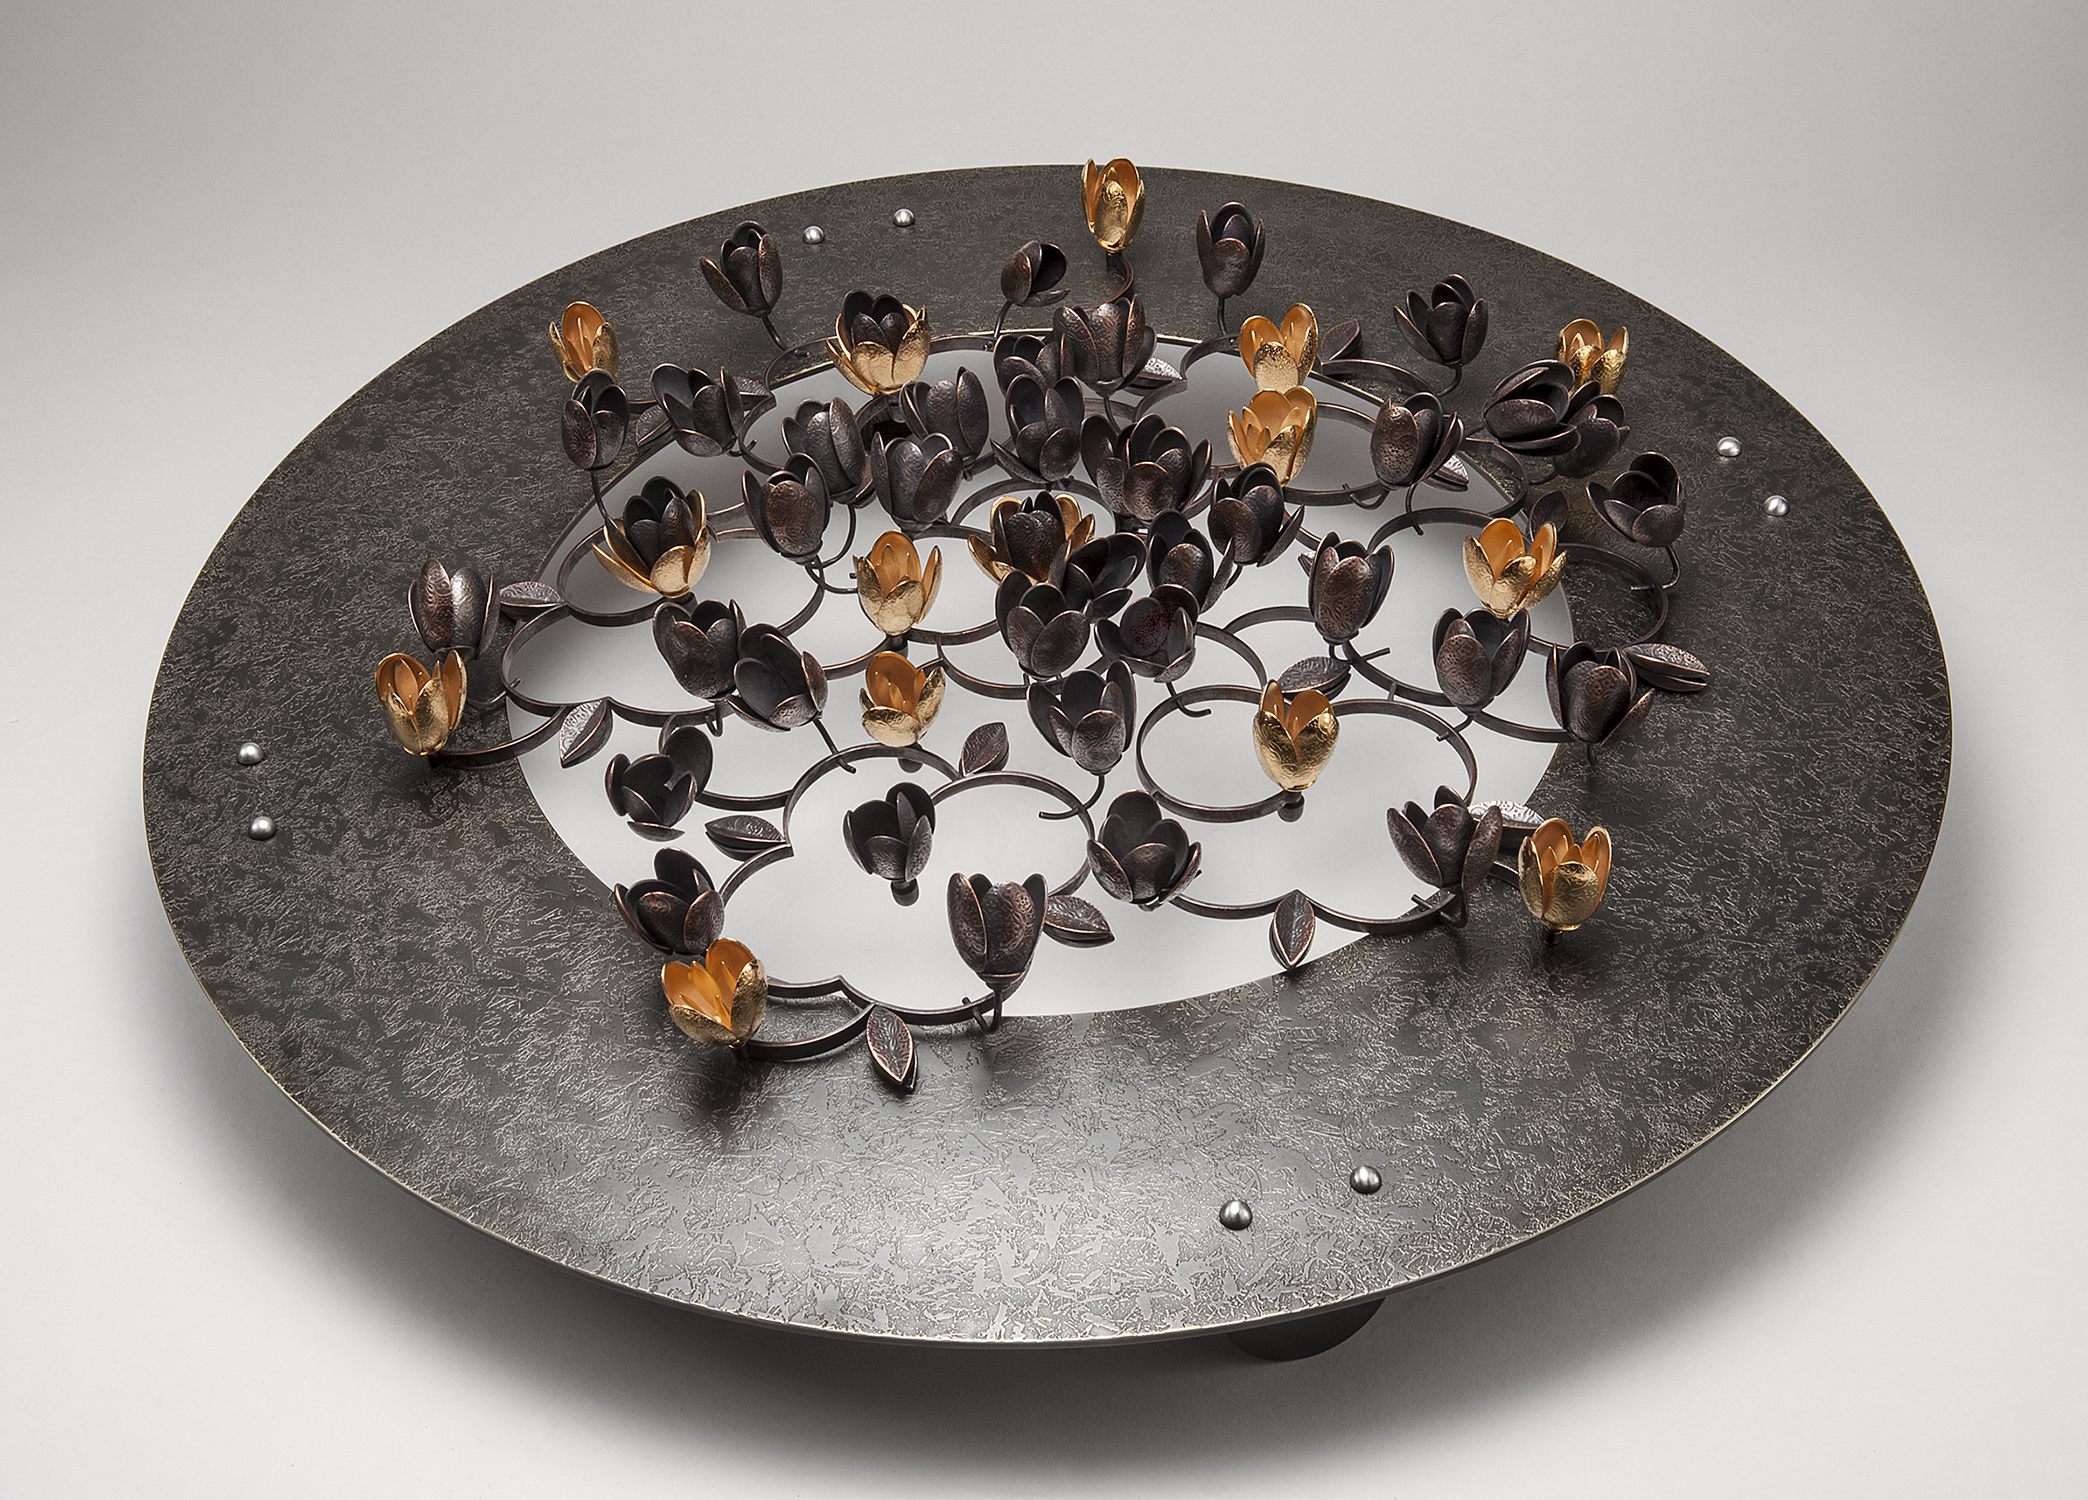 Pleasance  |  2015  |  bronze, copper, 24k gold plate  |  20 x 20 x 5 inches